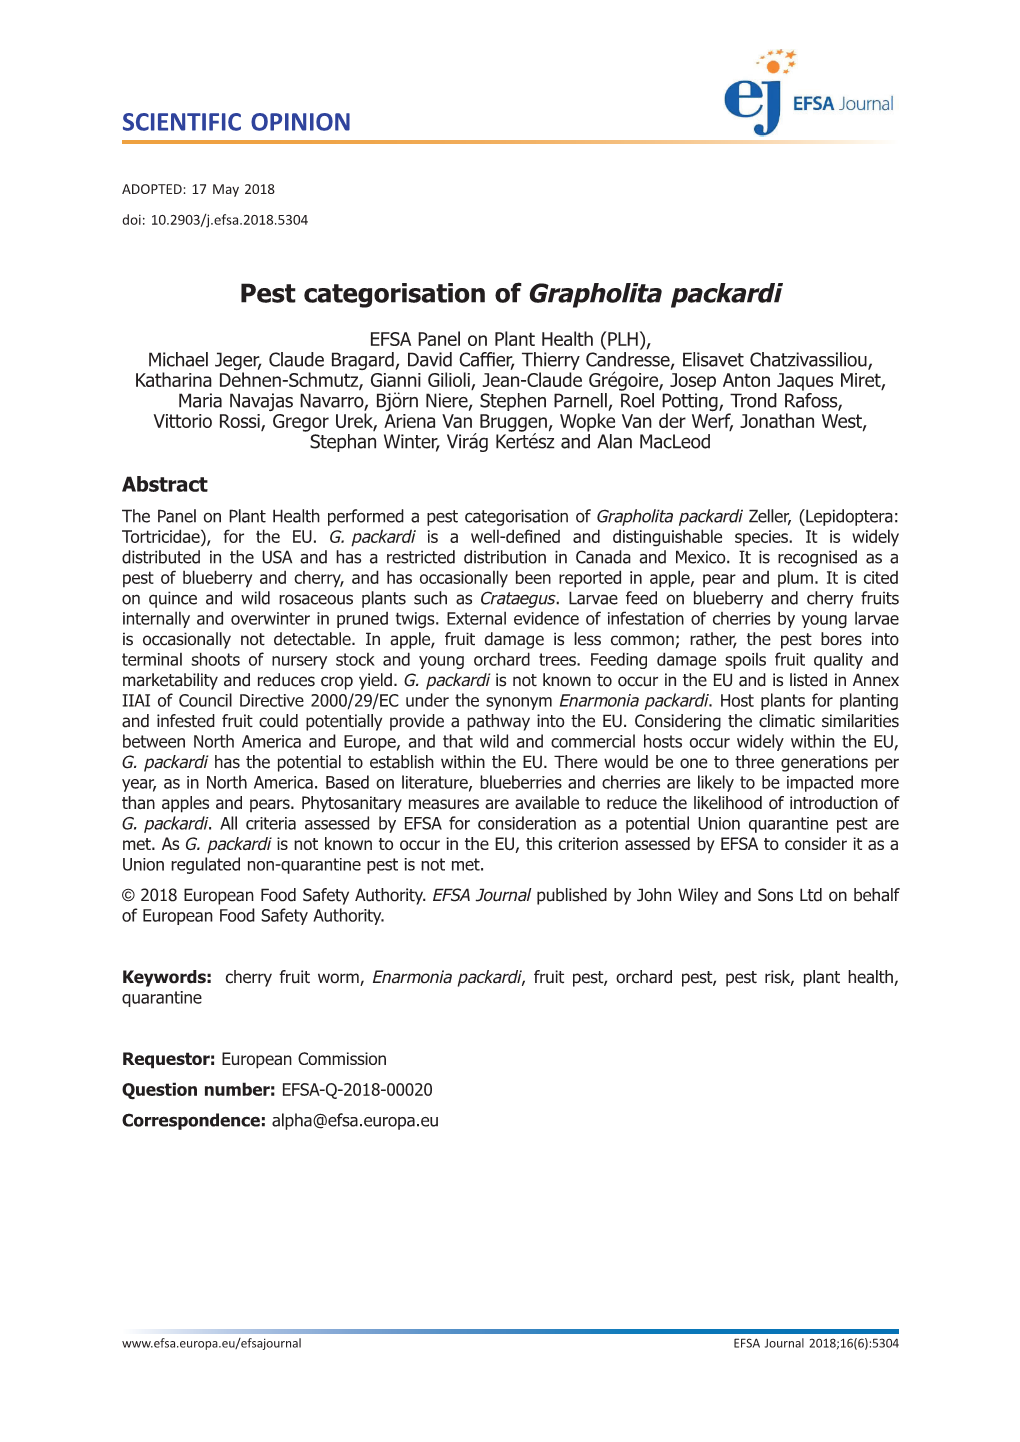 Pest Categorisation of Grapholita Packardi